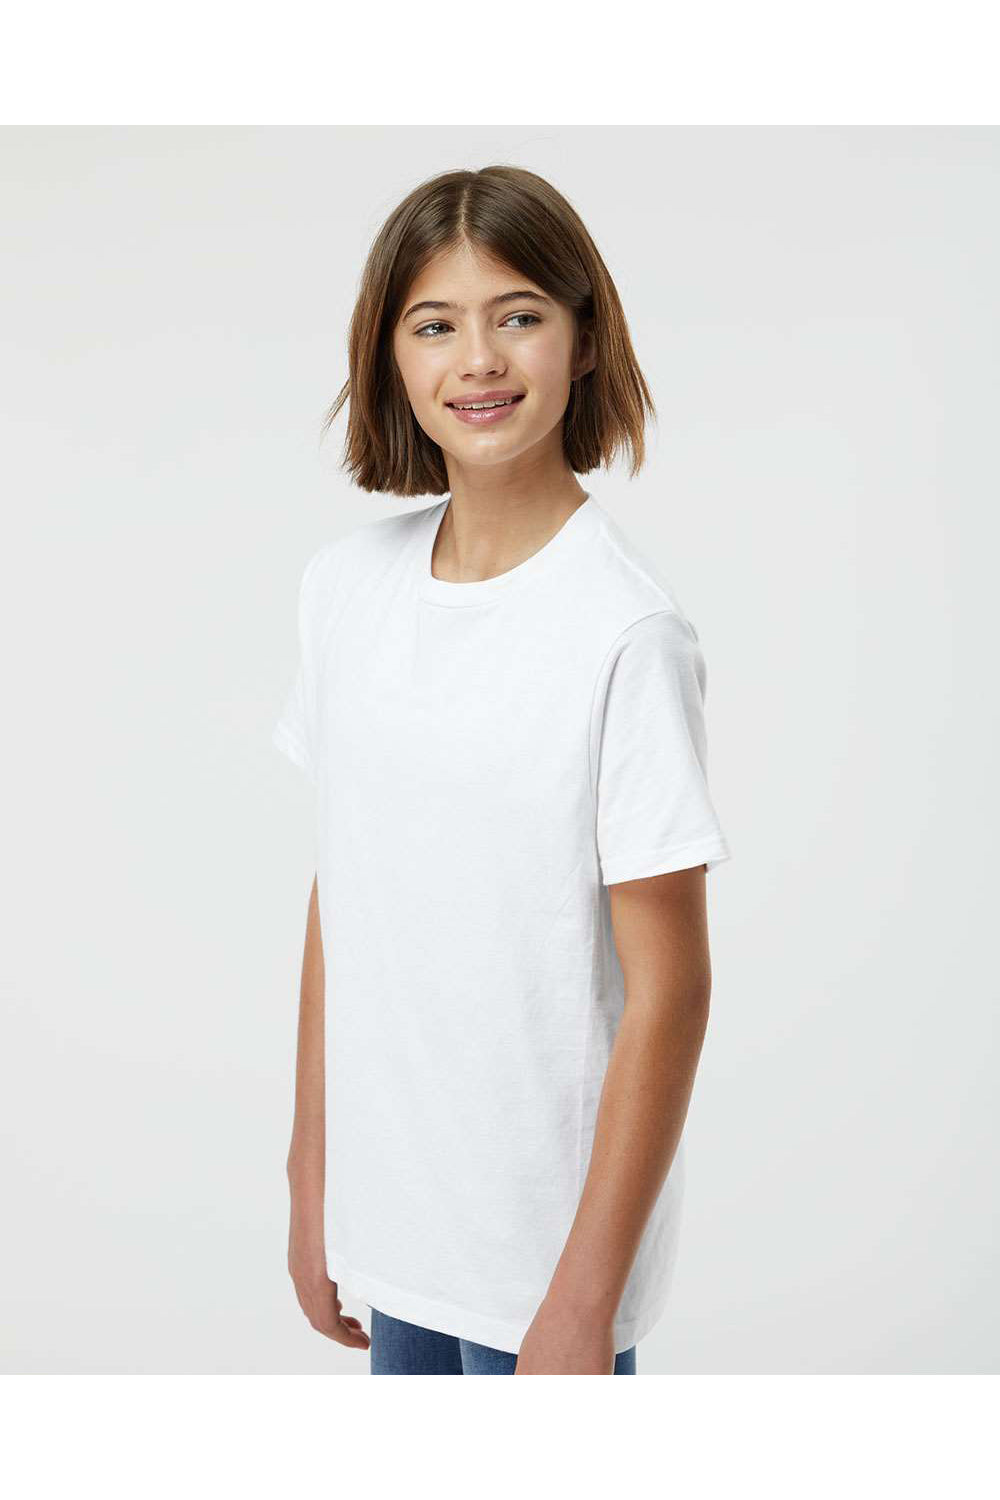 Tultex 295 Youth Jersey Short Sleeve Crewneck T-Shirt White Model Side